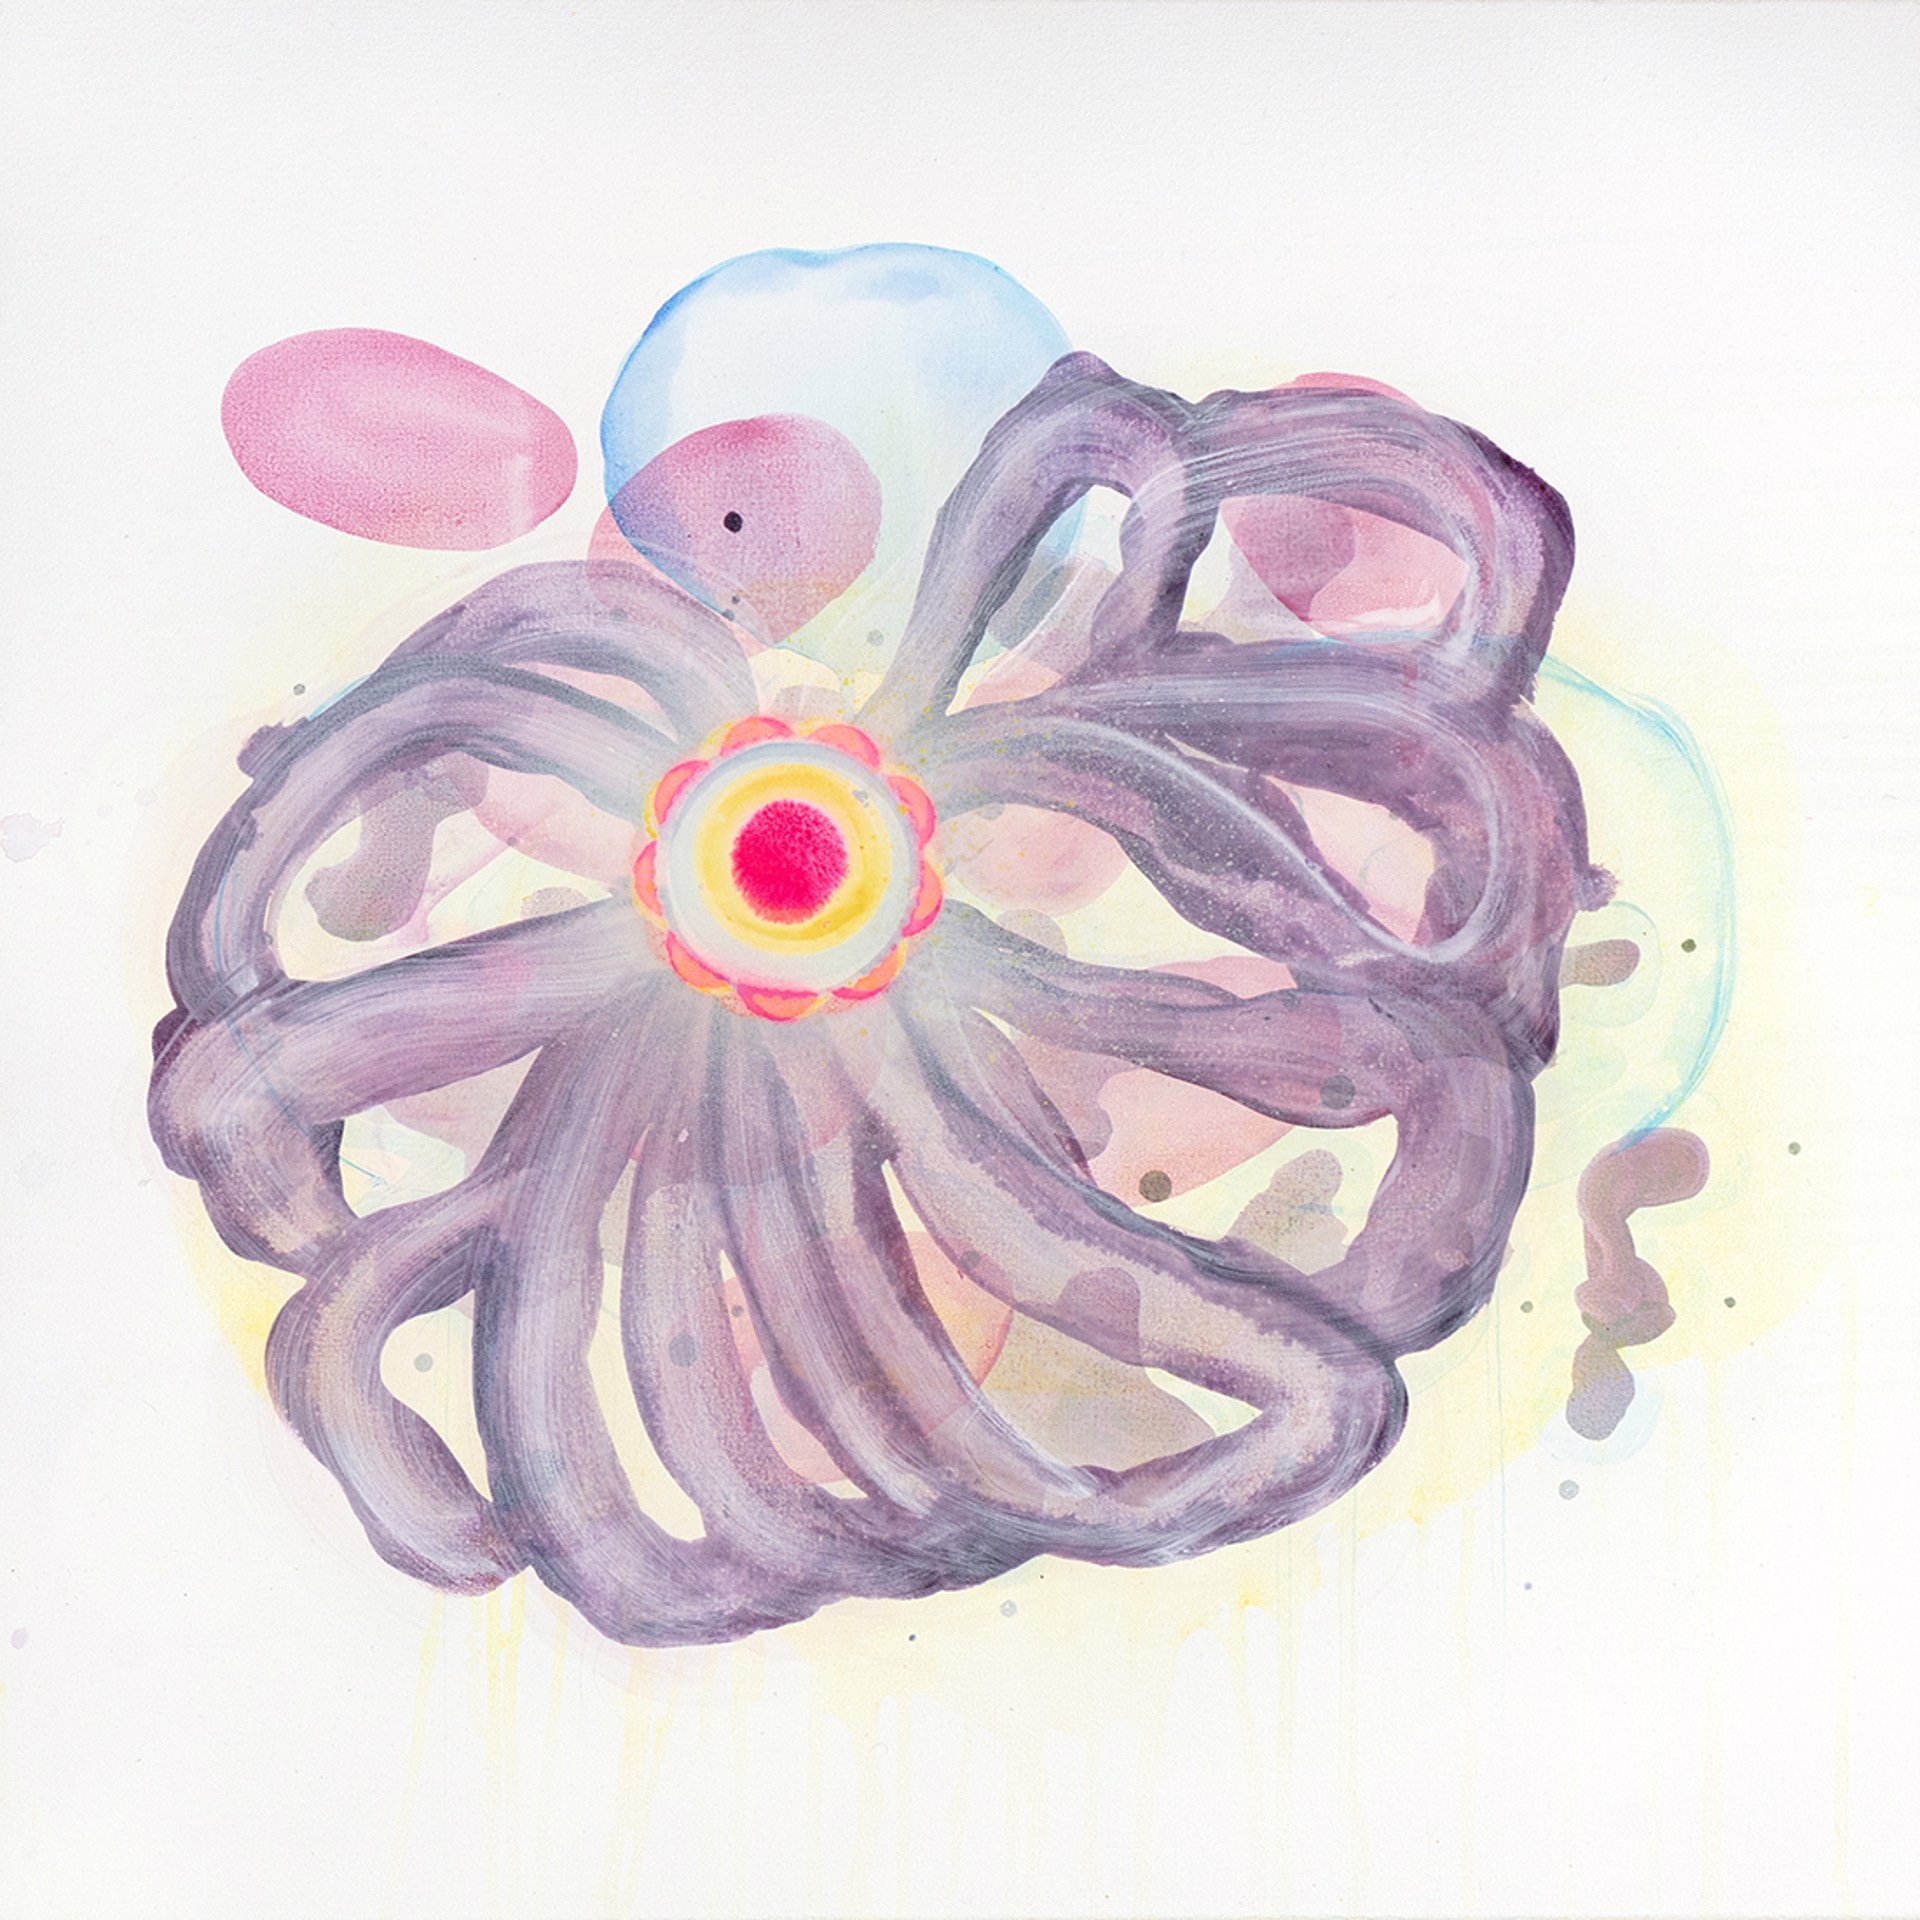 Untitled Blossom by Shawn Hall